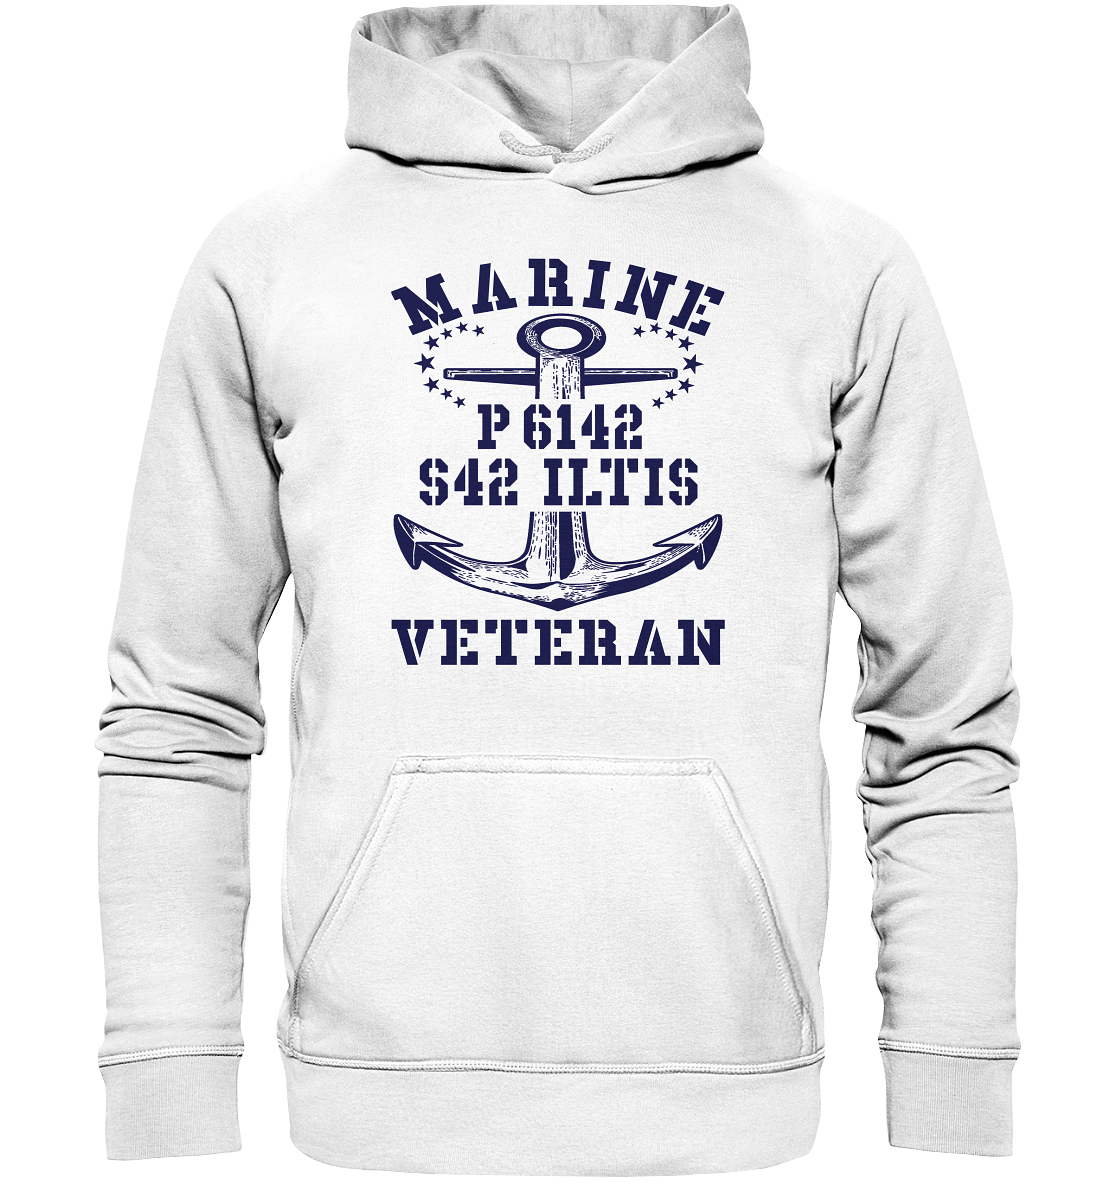 P6142 S42 ILTIS Marine Veteran - Basic Unisex Hoodie